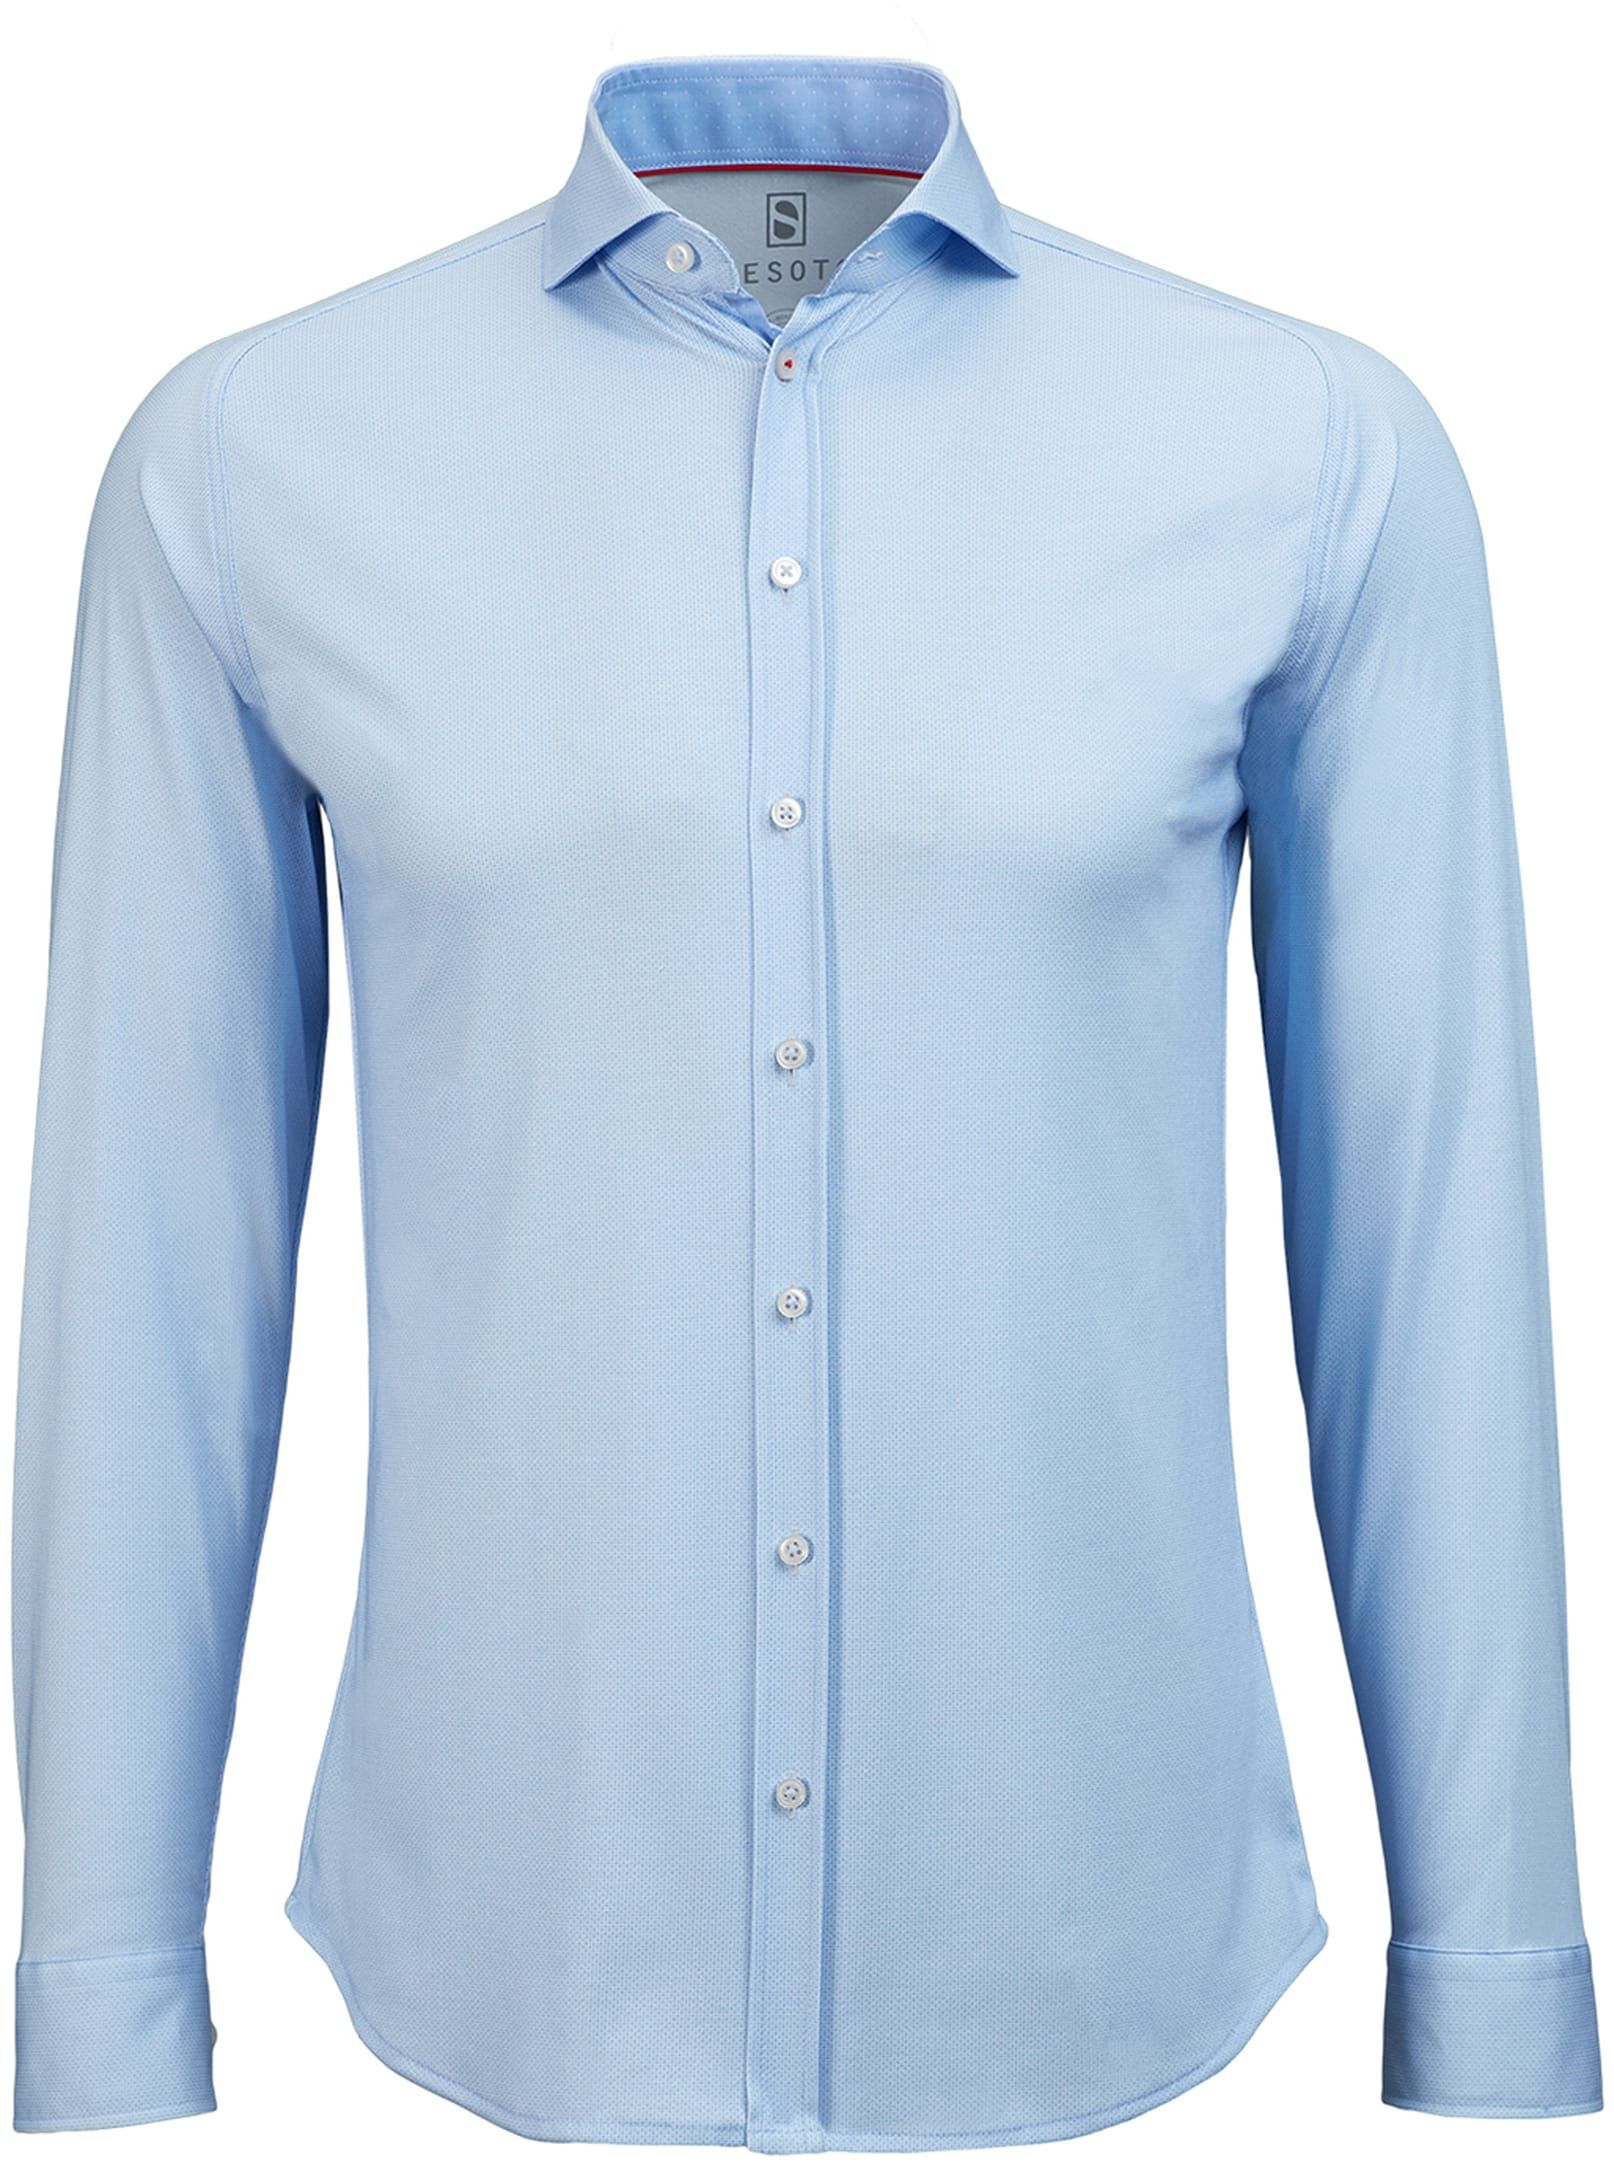 Desoto Shirt Non Iron Oxford Blue size 3XL